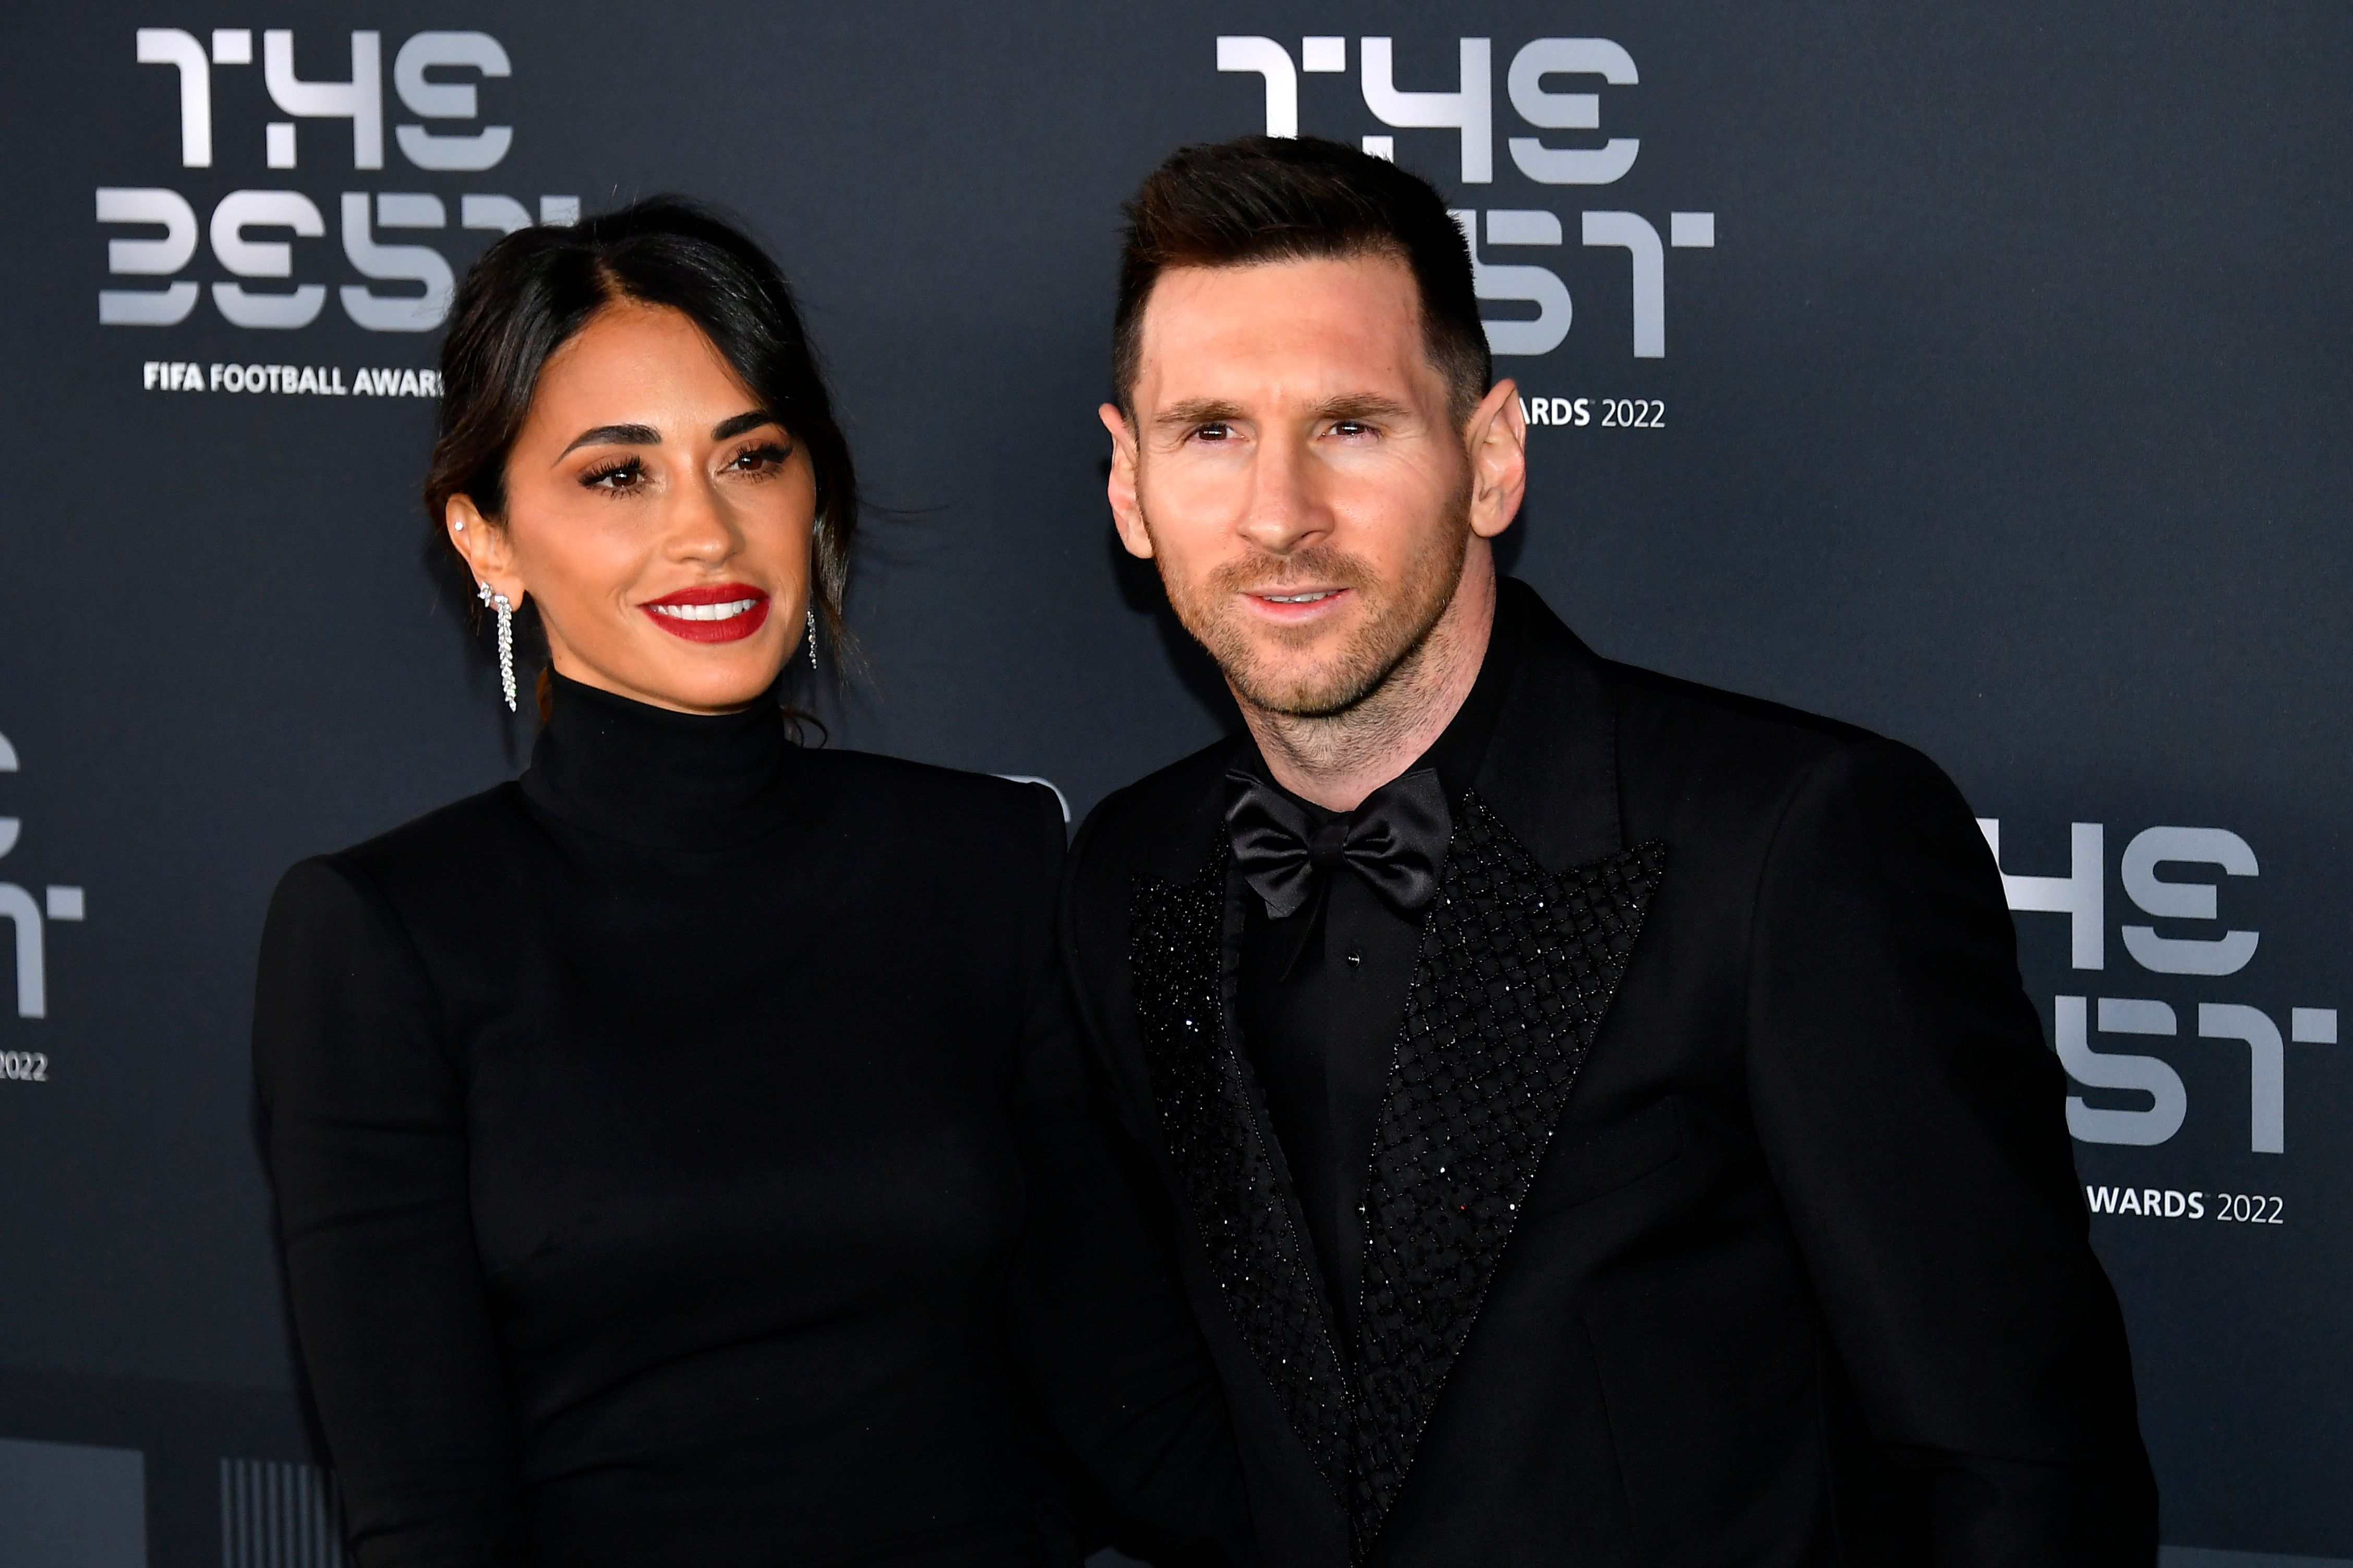 Messi with his wife, Antonela